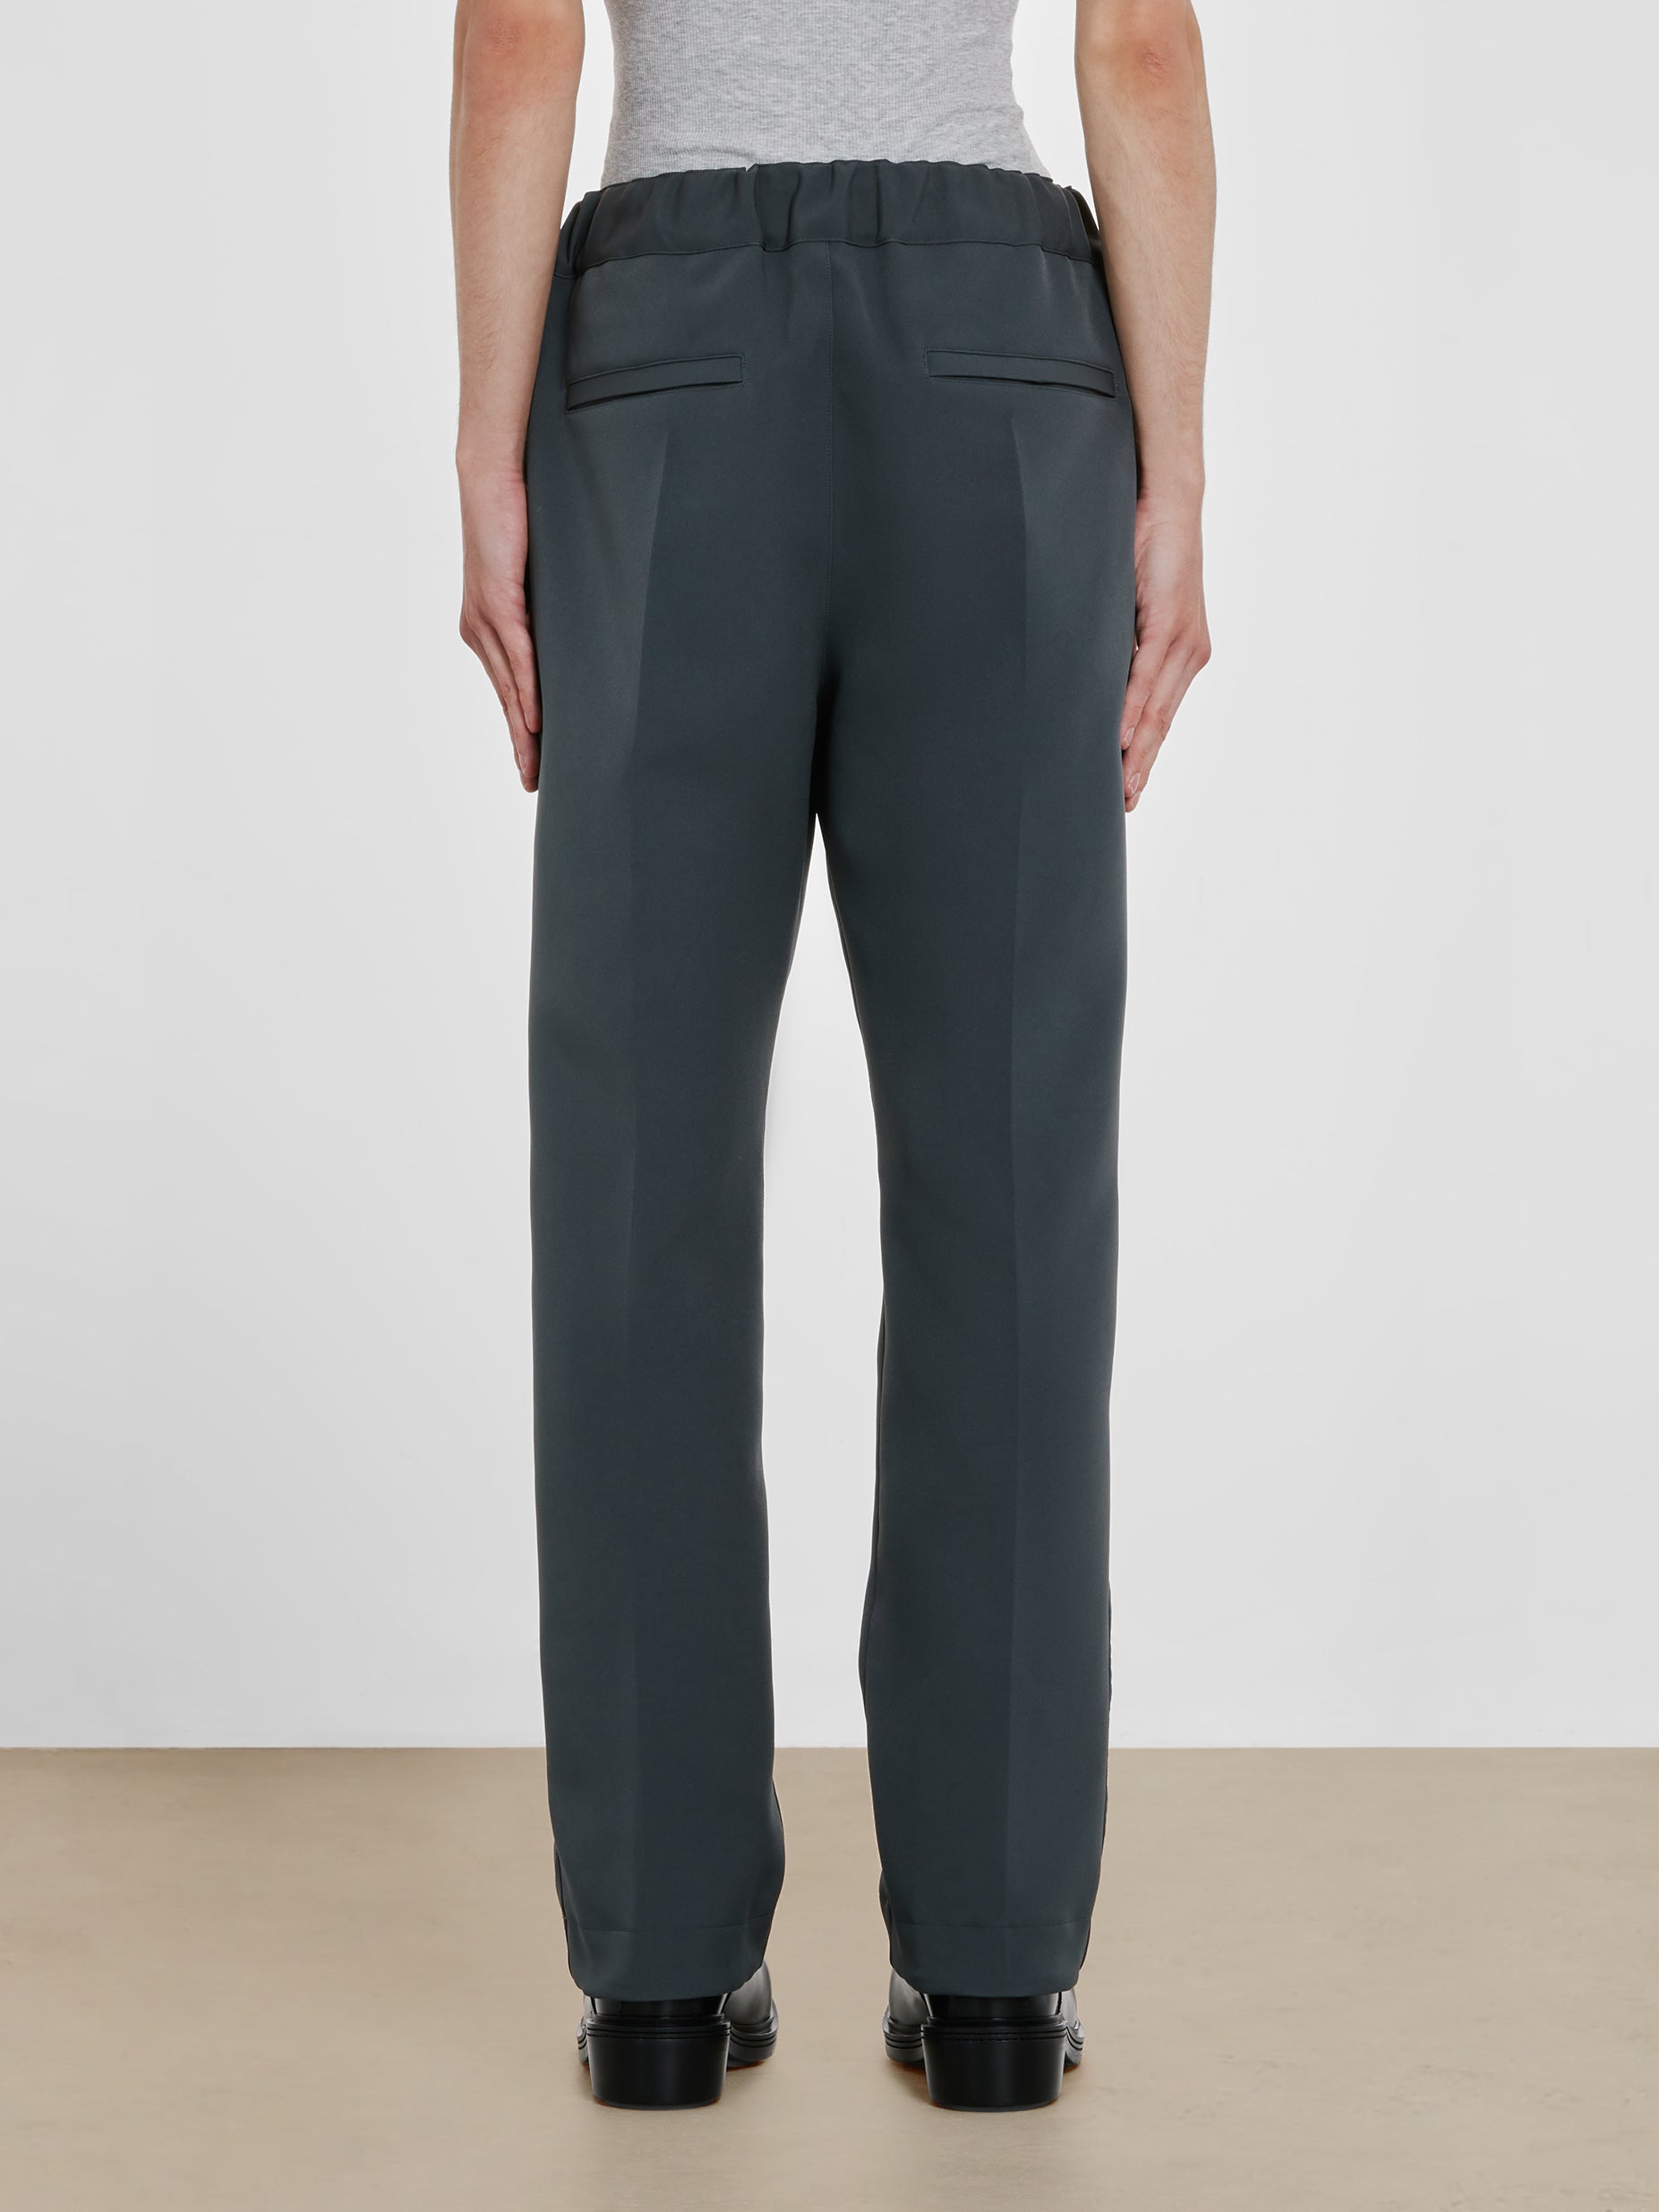 sacai - Men’s Technical Jersey Pants - (Charcoal) view 3